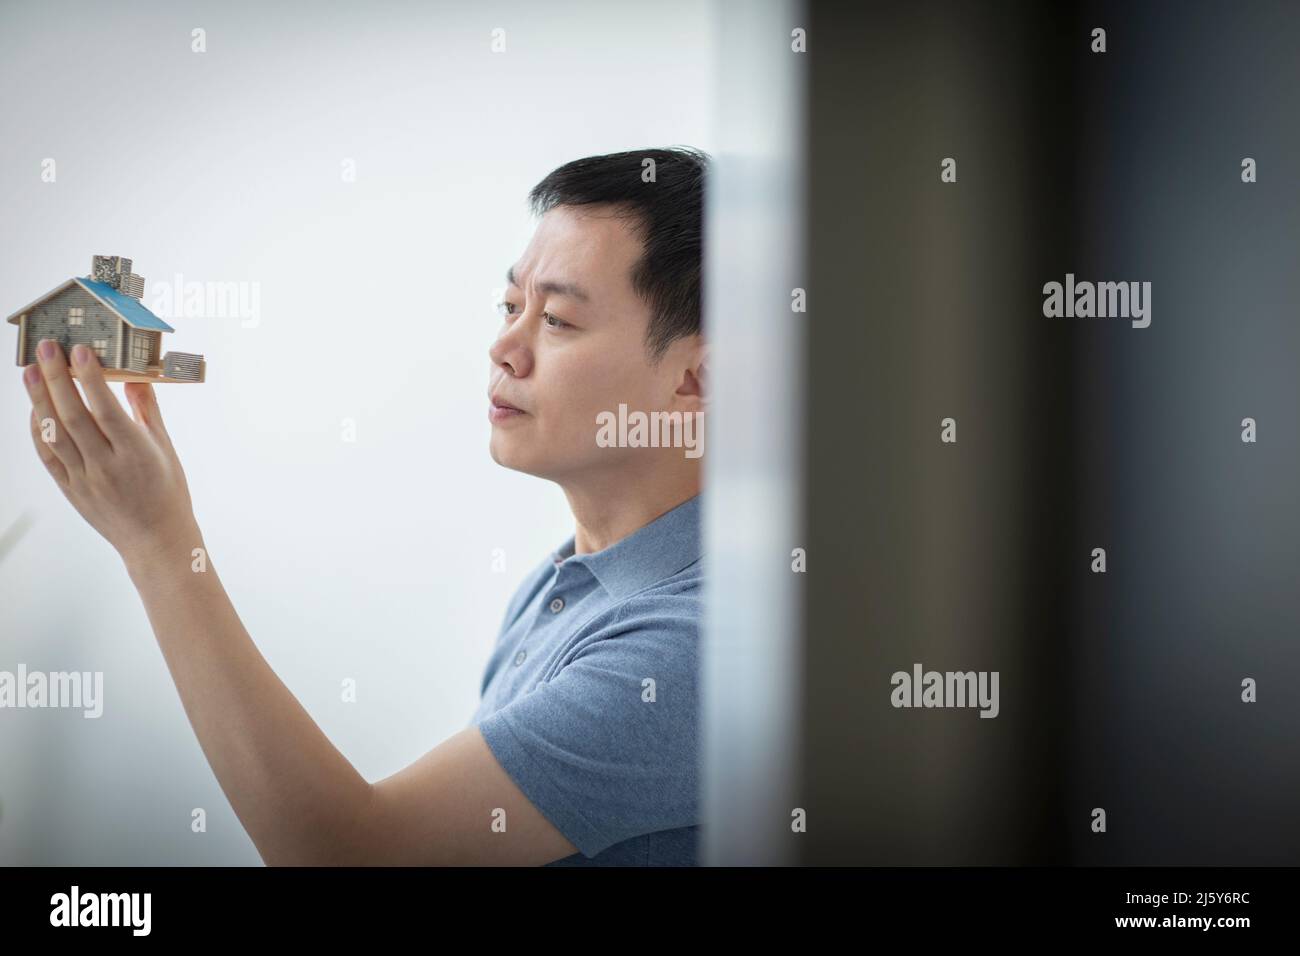 Male architect inspecting house model Stock Photo